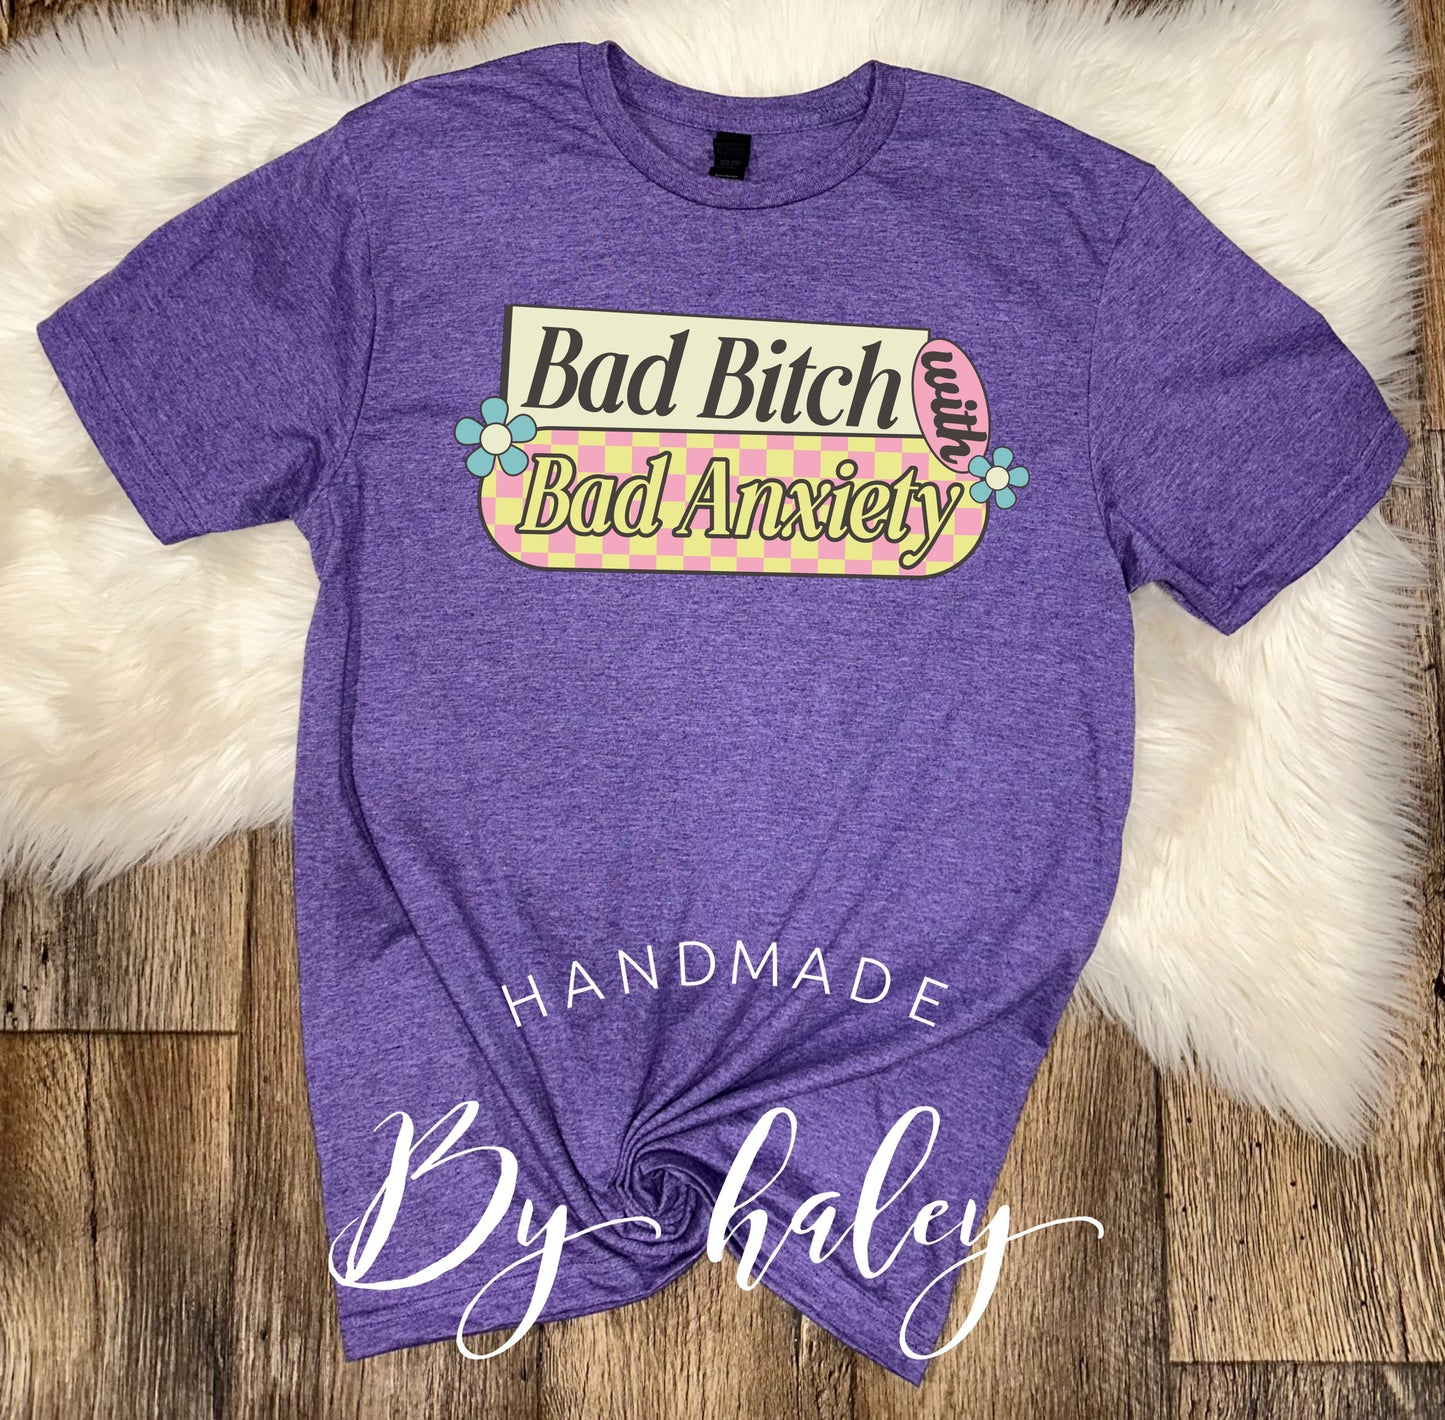 Bad Anxiety T-Shirt